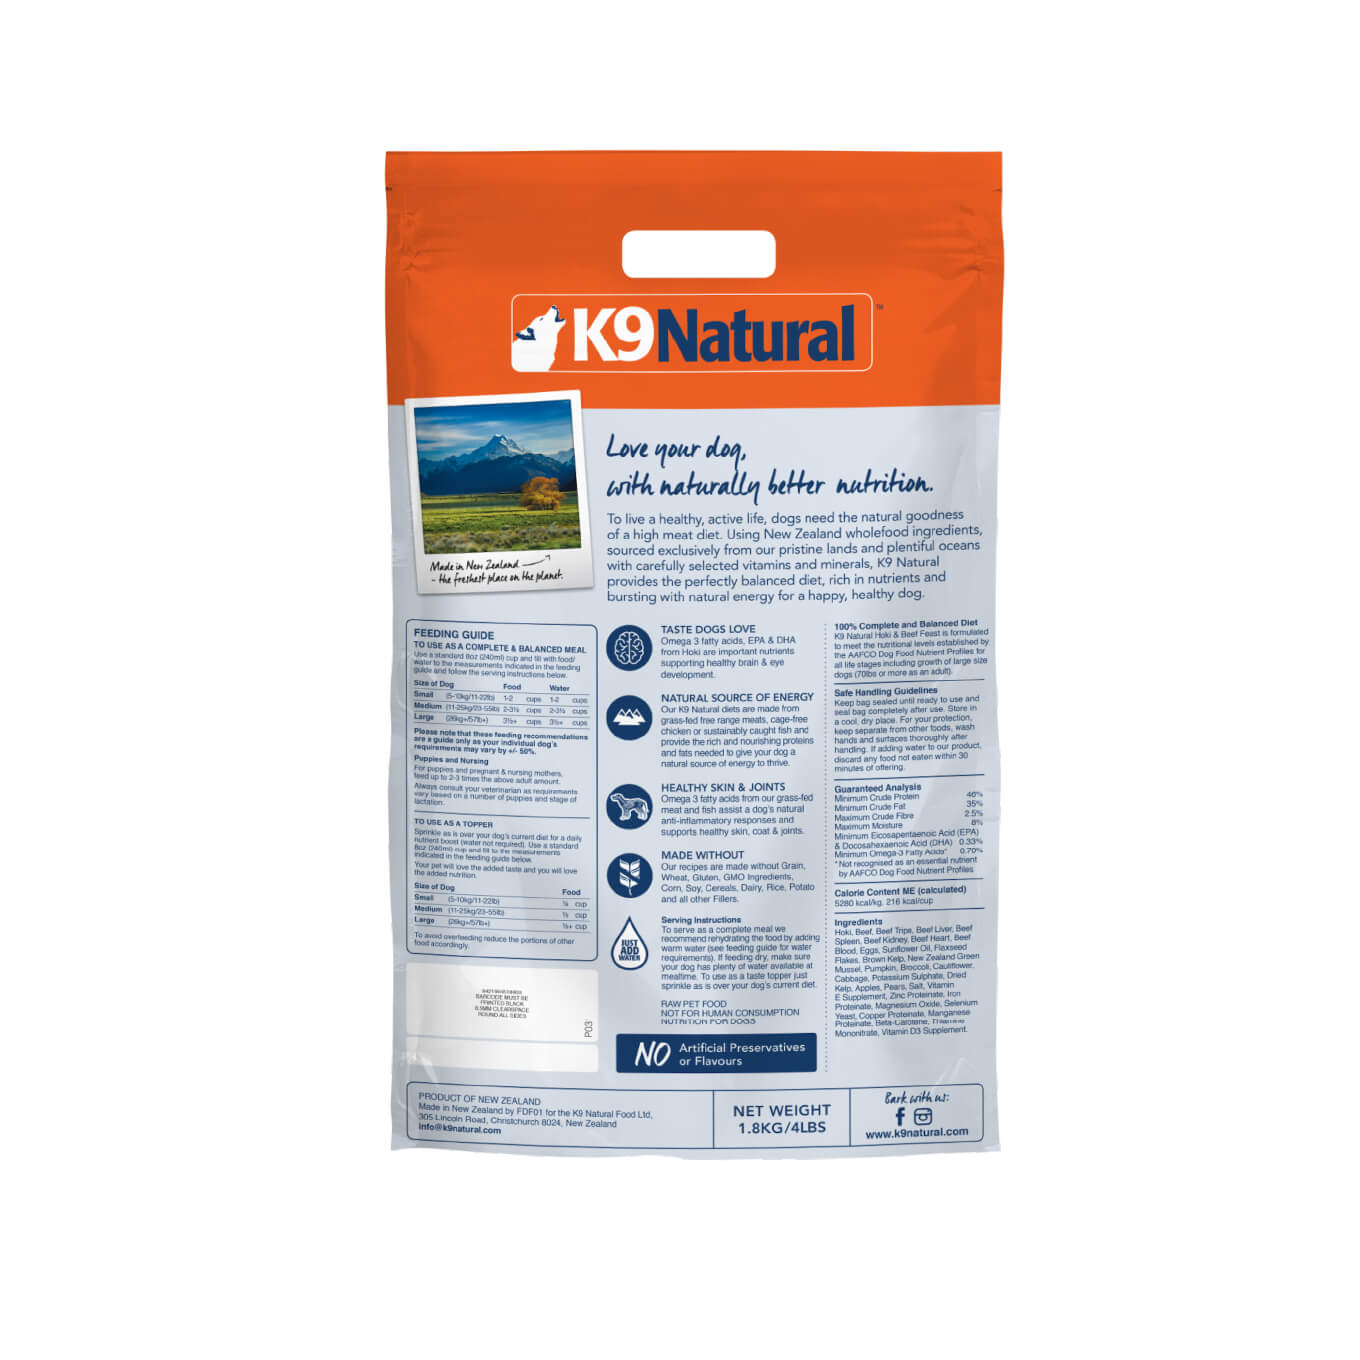 K9 Natural Freeze-dried Hoki & Beef Feast [Buy 2 @ 30% Off] - Vanillapup Online Pet Store